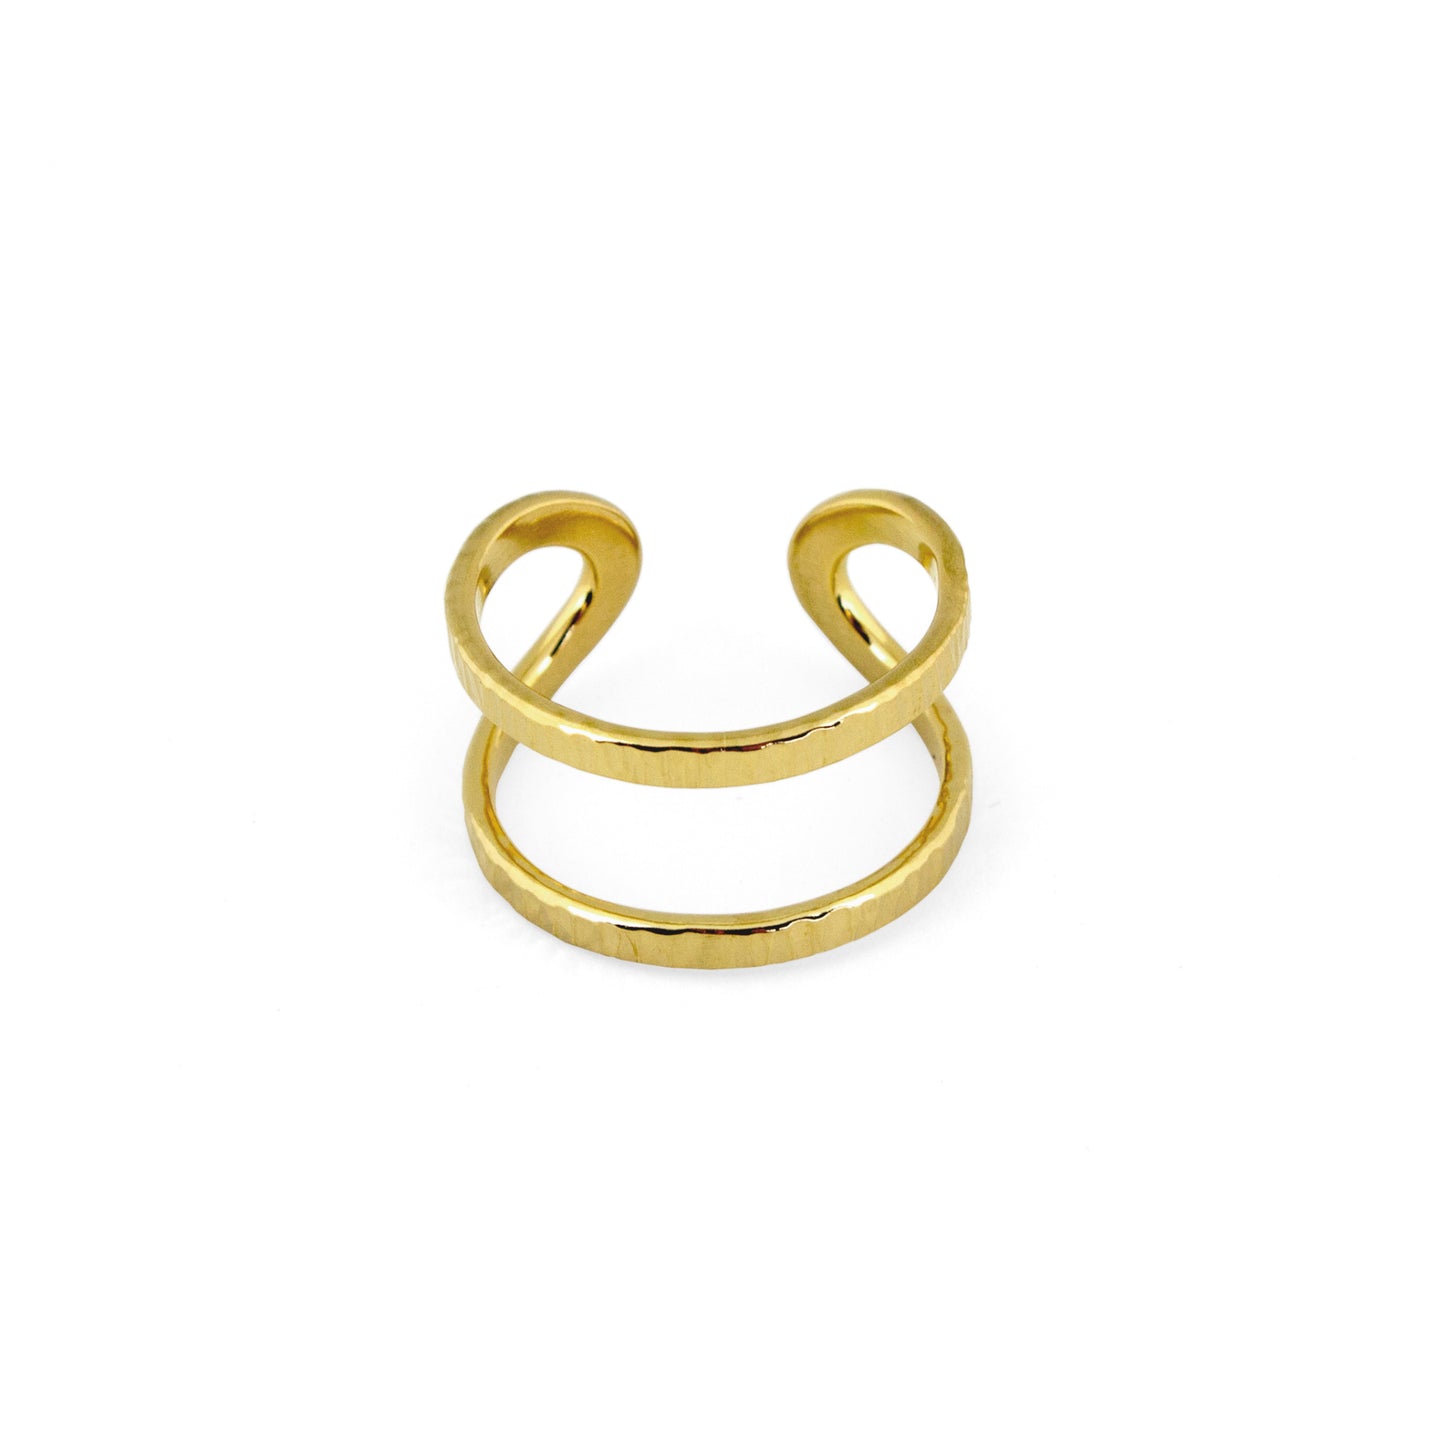 handmade gold wrap ring made in christchurch nz